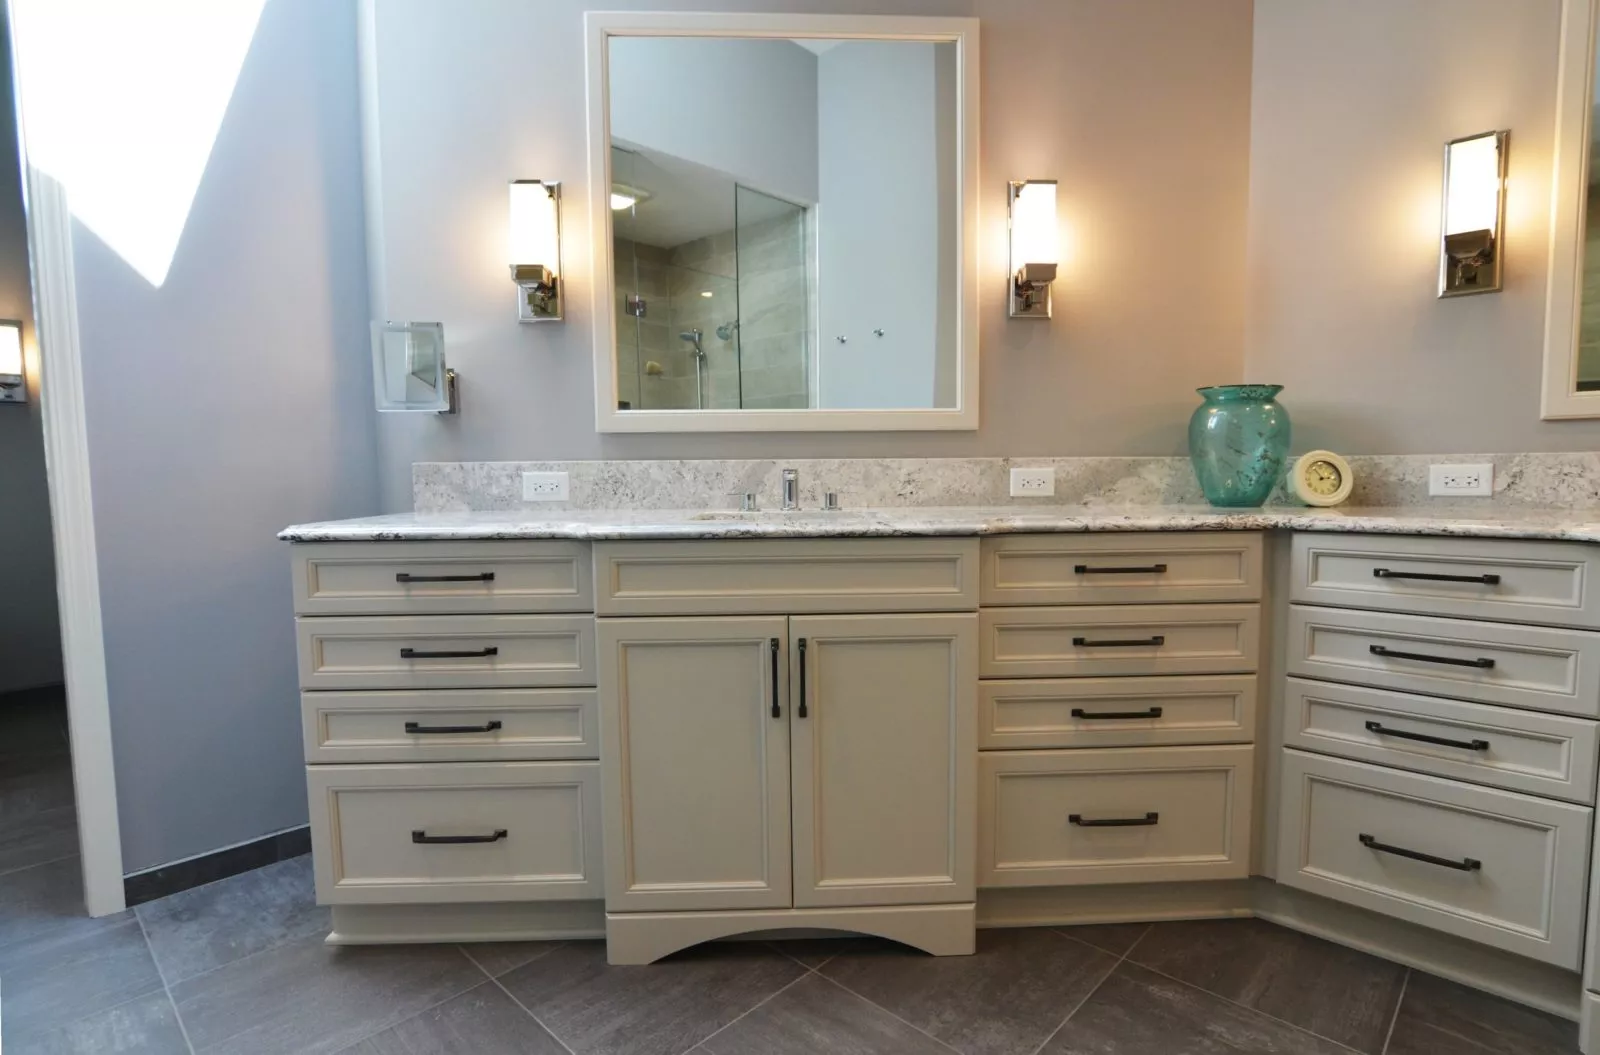 the kitchen master bathroom renovation vanity white cabinets quartz countertops lighting fixtures